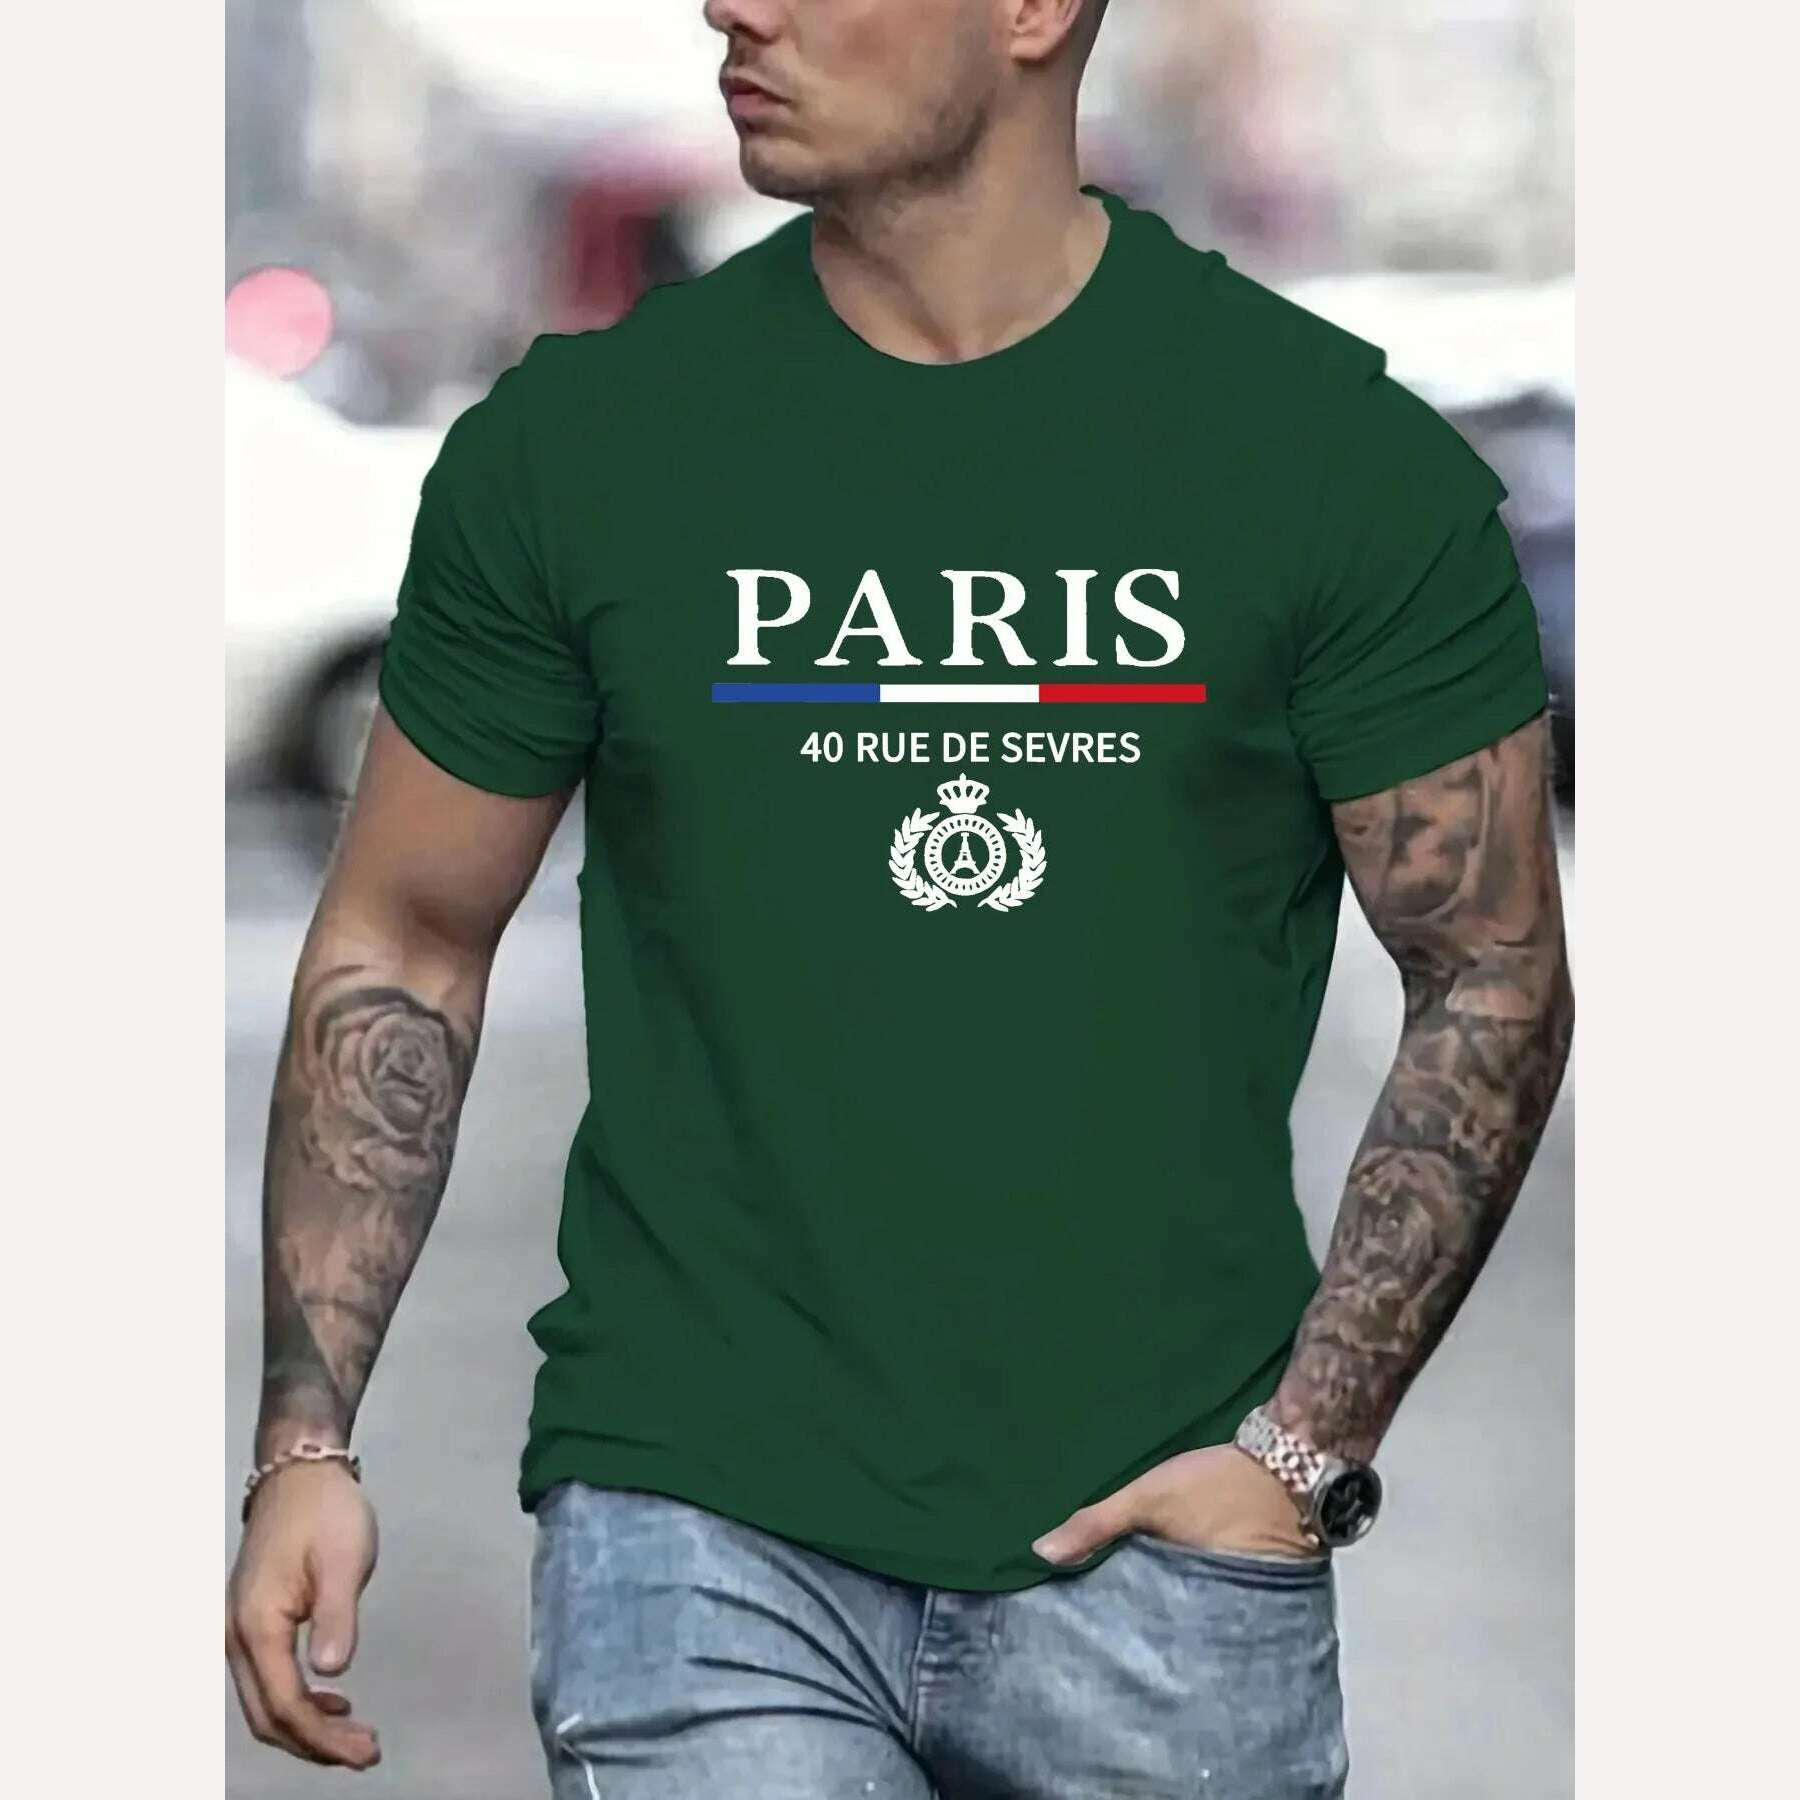 KIMLUD, Men's Autumn Winter Hooded Fashion Sweater Tshirt Tops, 0-PARIS-lv / M, KIMLUD Womens Clothes